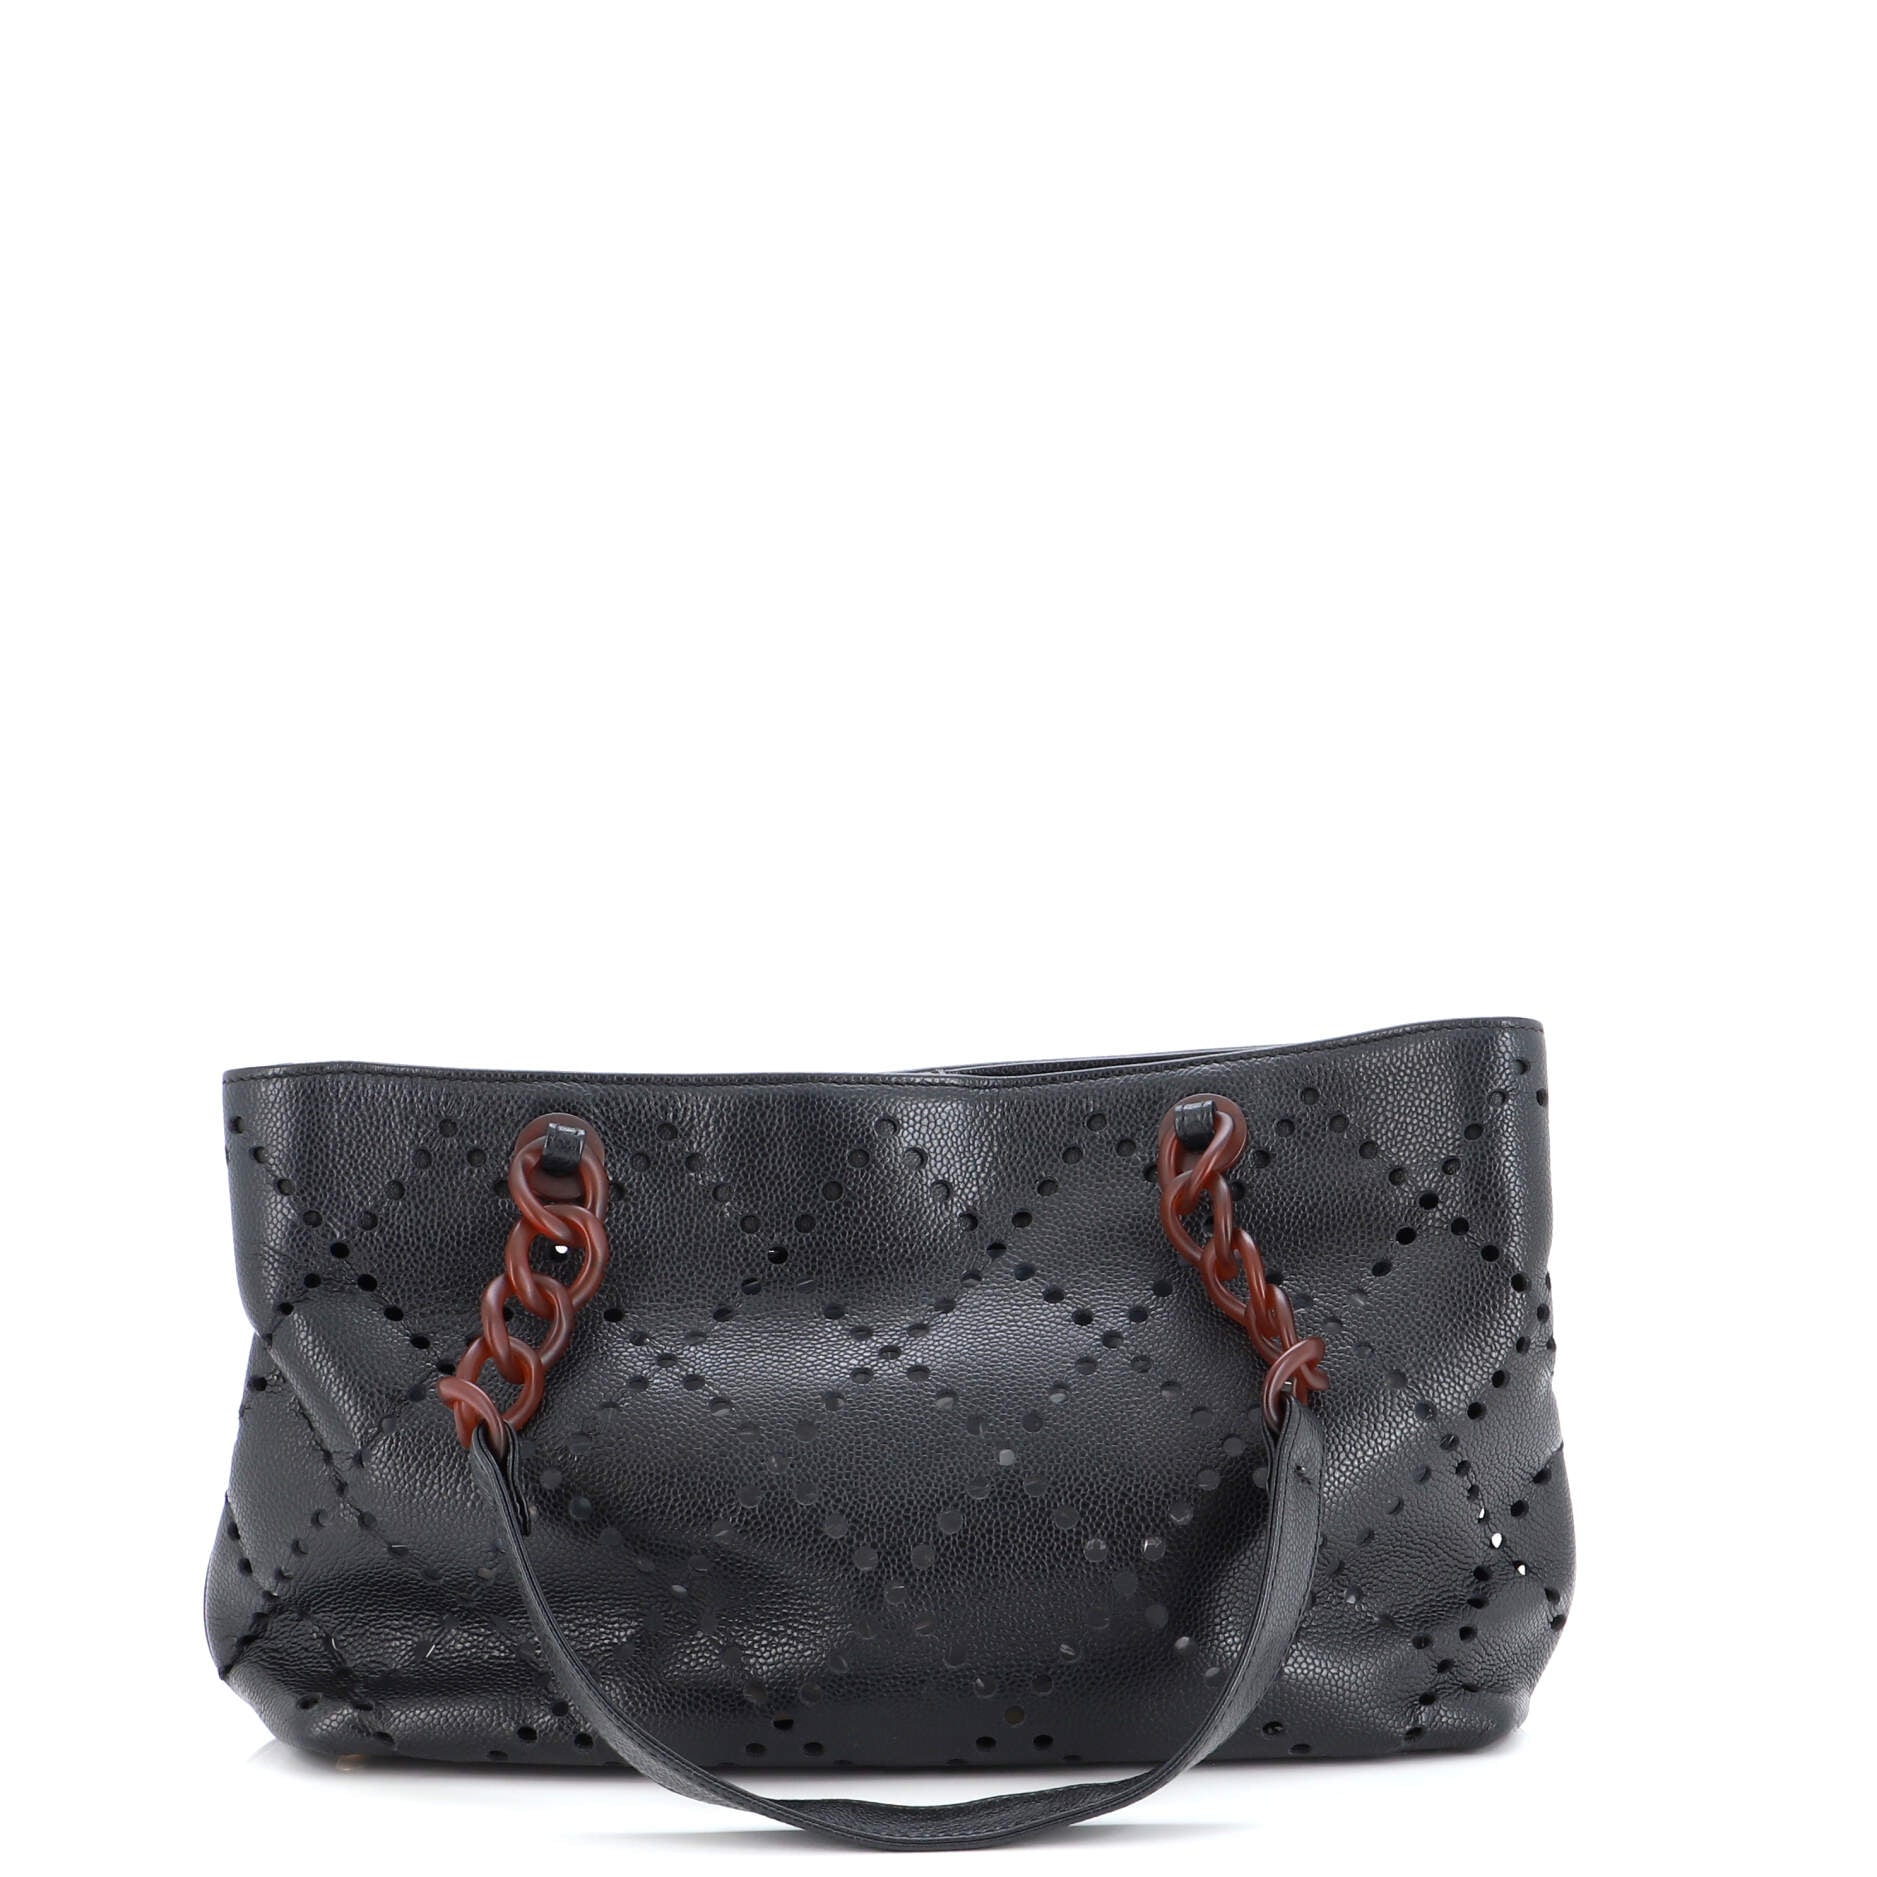 Chanel Black Large Luxury Modern Resin Chain Jumbo Tote Bag